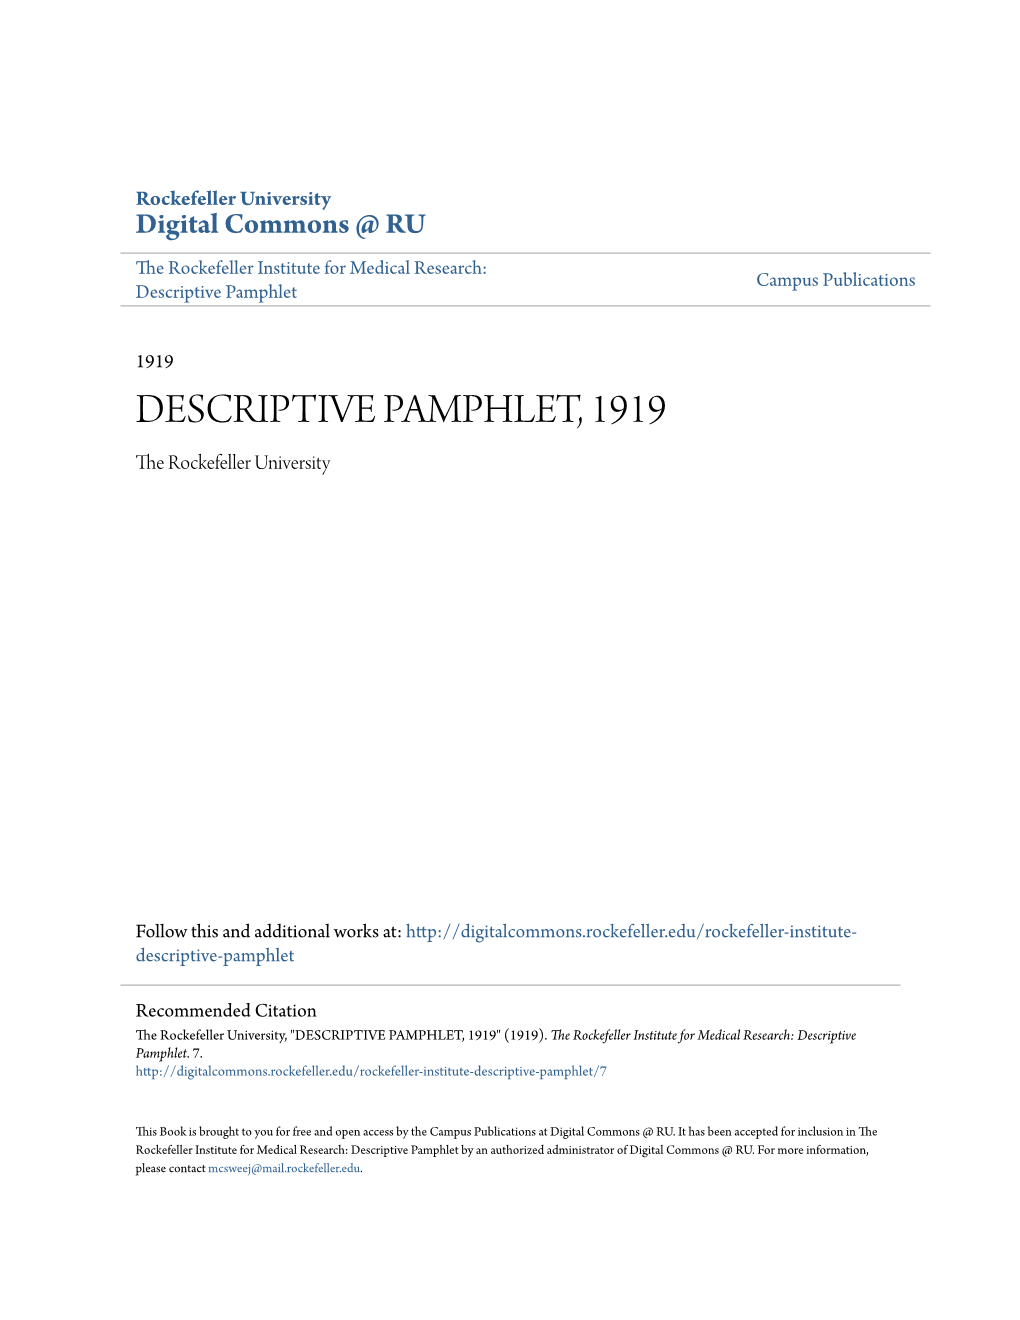 DESCRIPTIVE PAMPHLET, 1919 the Rockefeller University